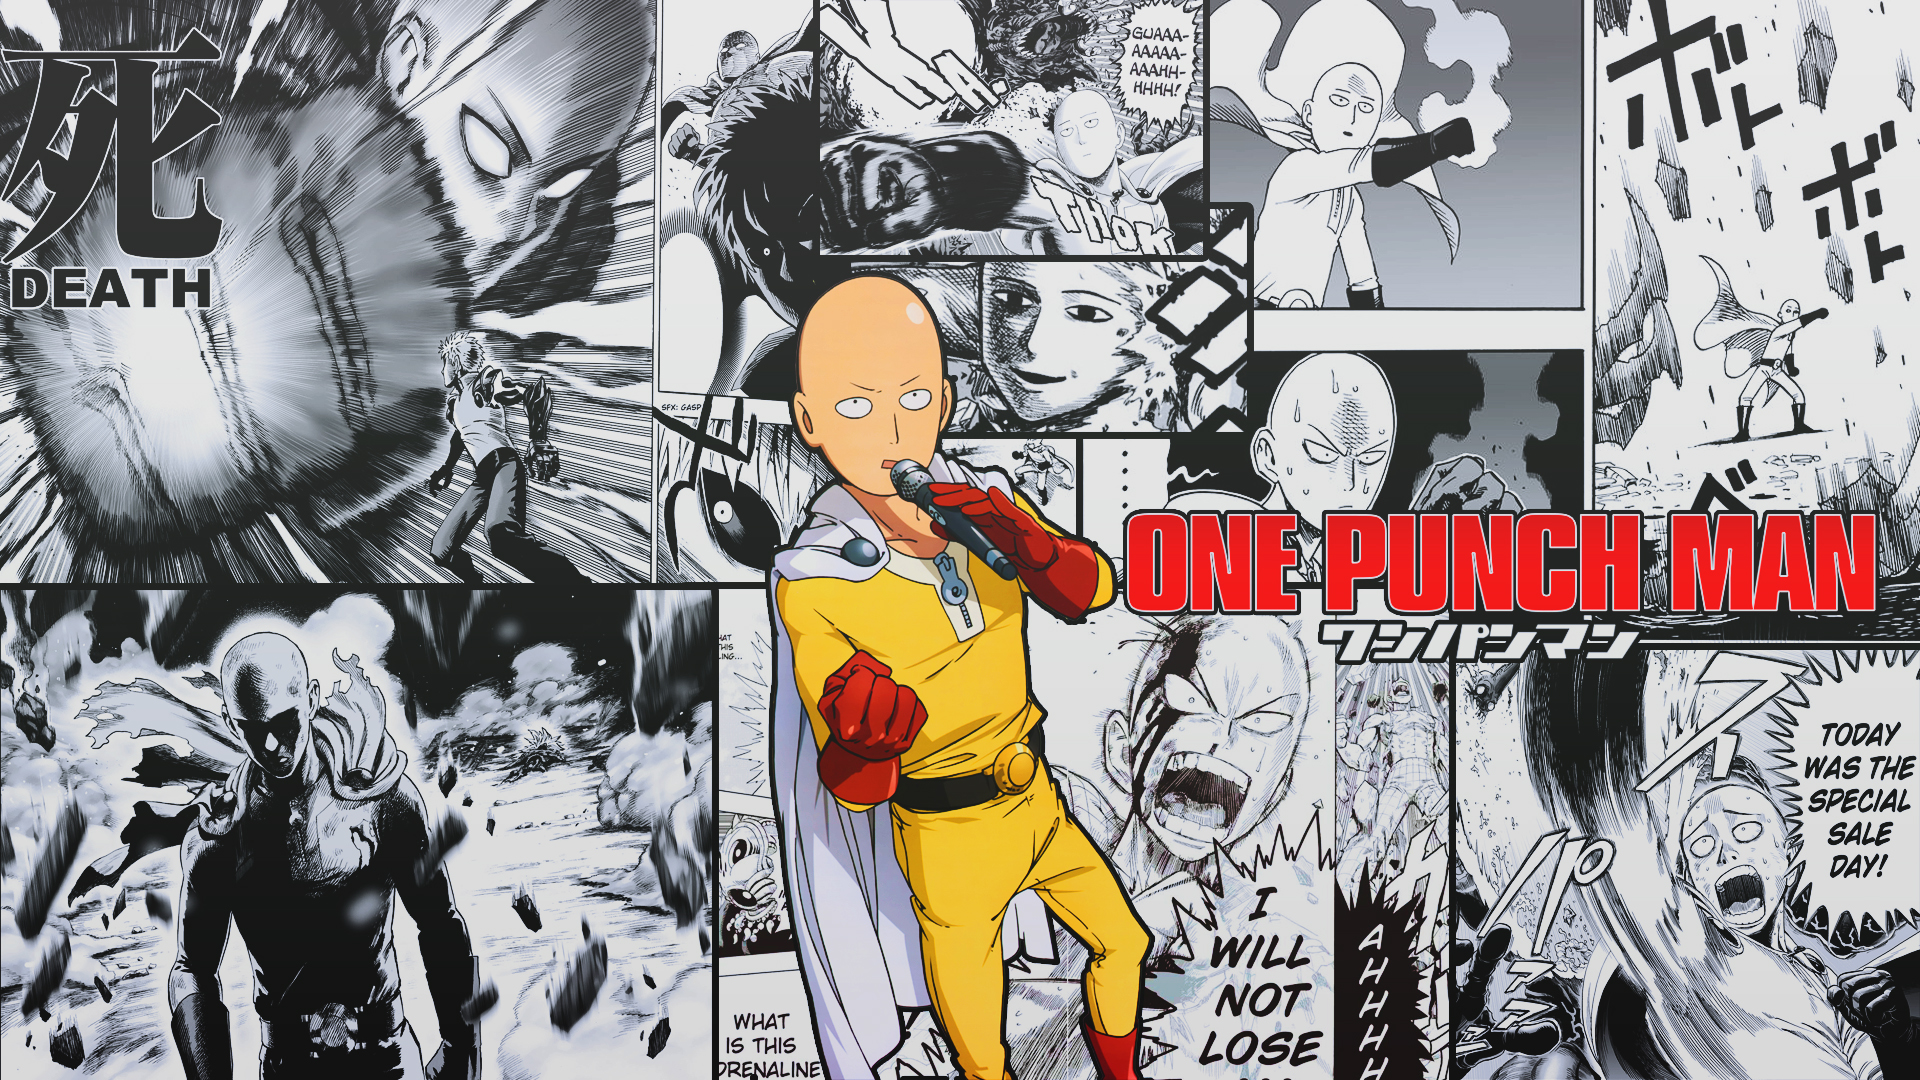 Descarga gratuita de fondo de pantalla para móvil de Animado, Saitama (Hombre De Un Solo Golpe), One Punch Man.